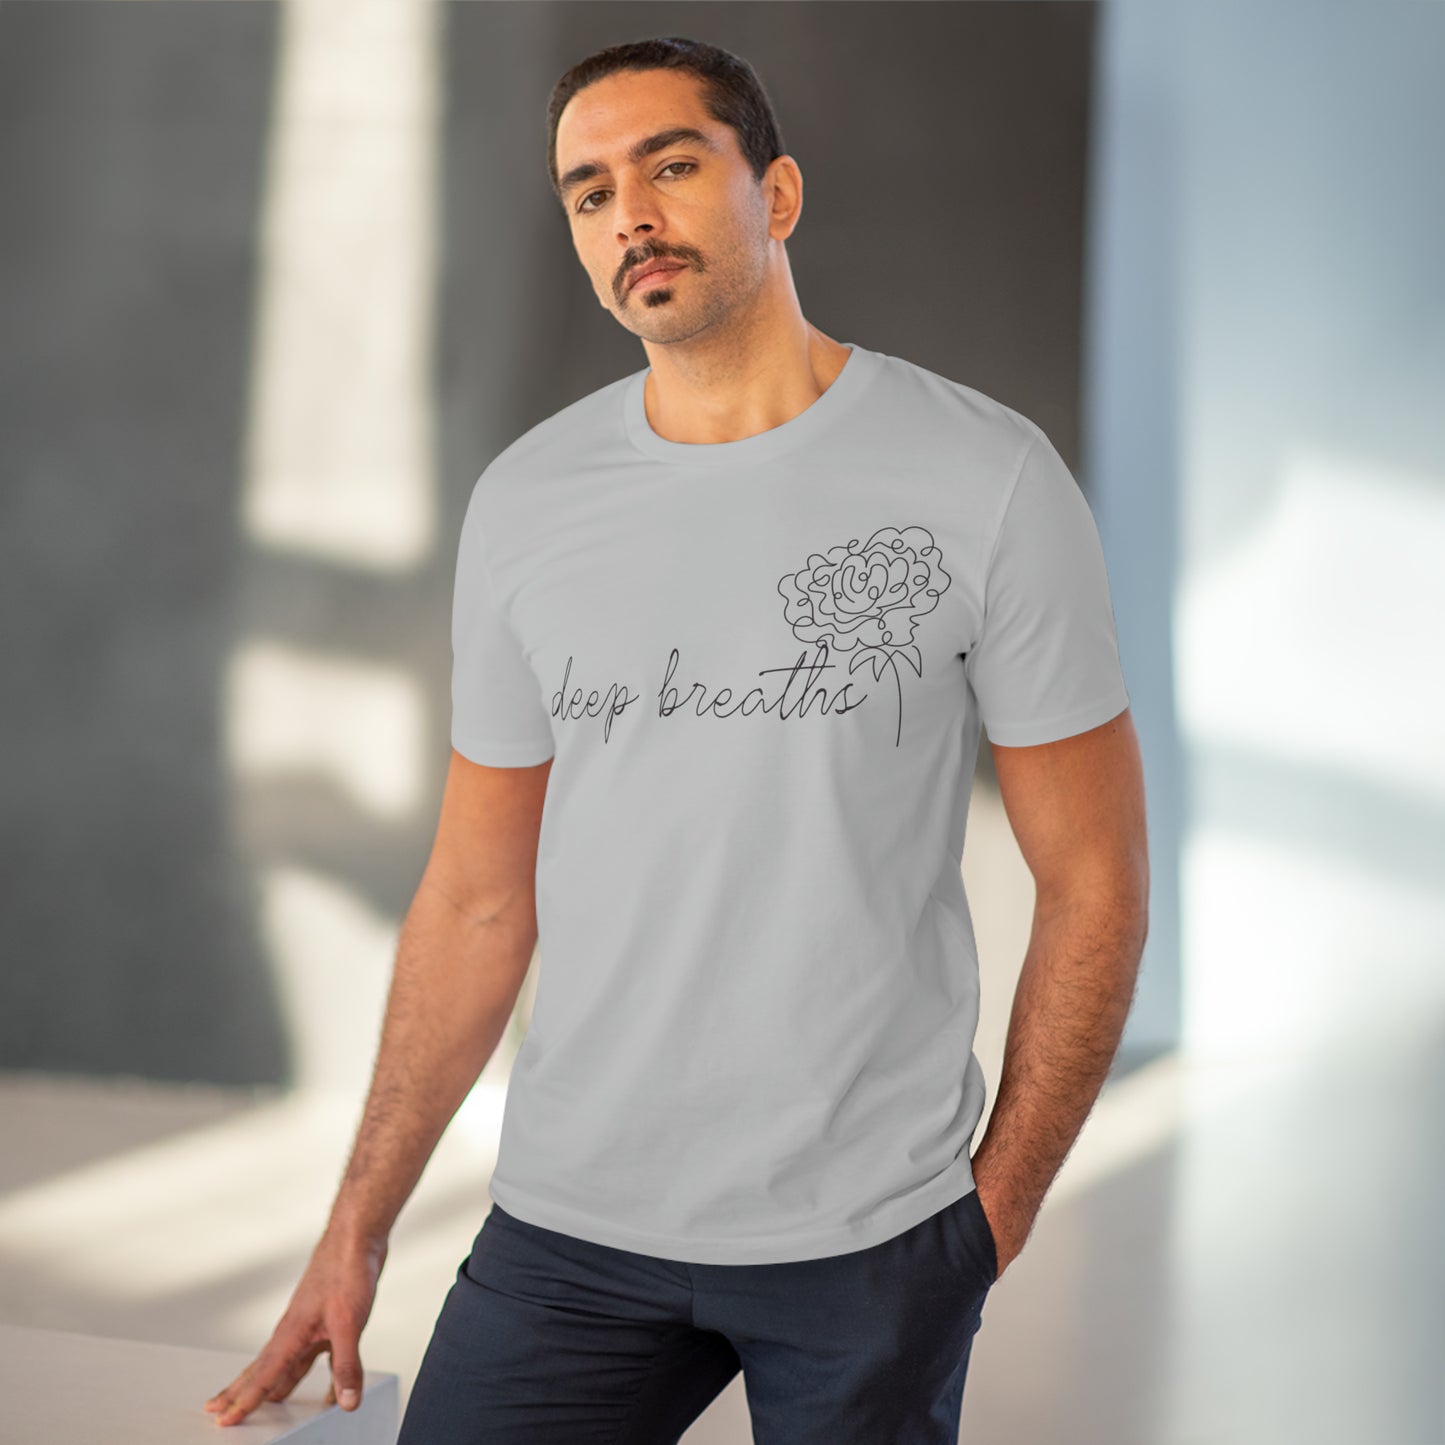 Deep Breaths - Organic T-shirt - Unisex